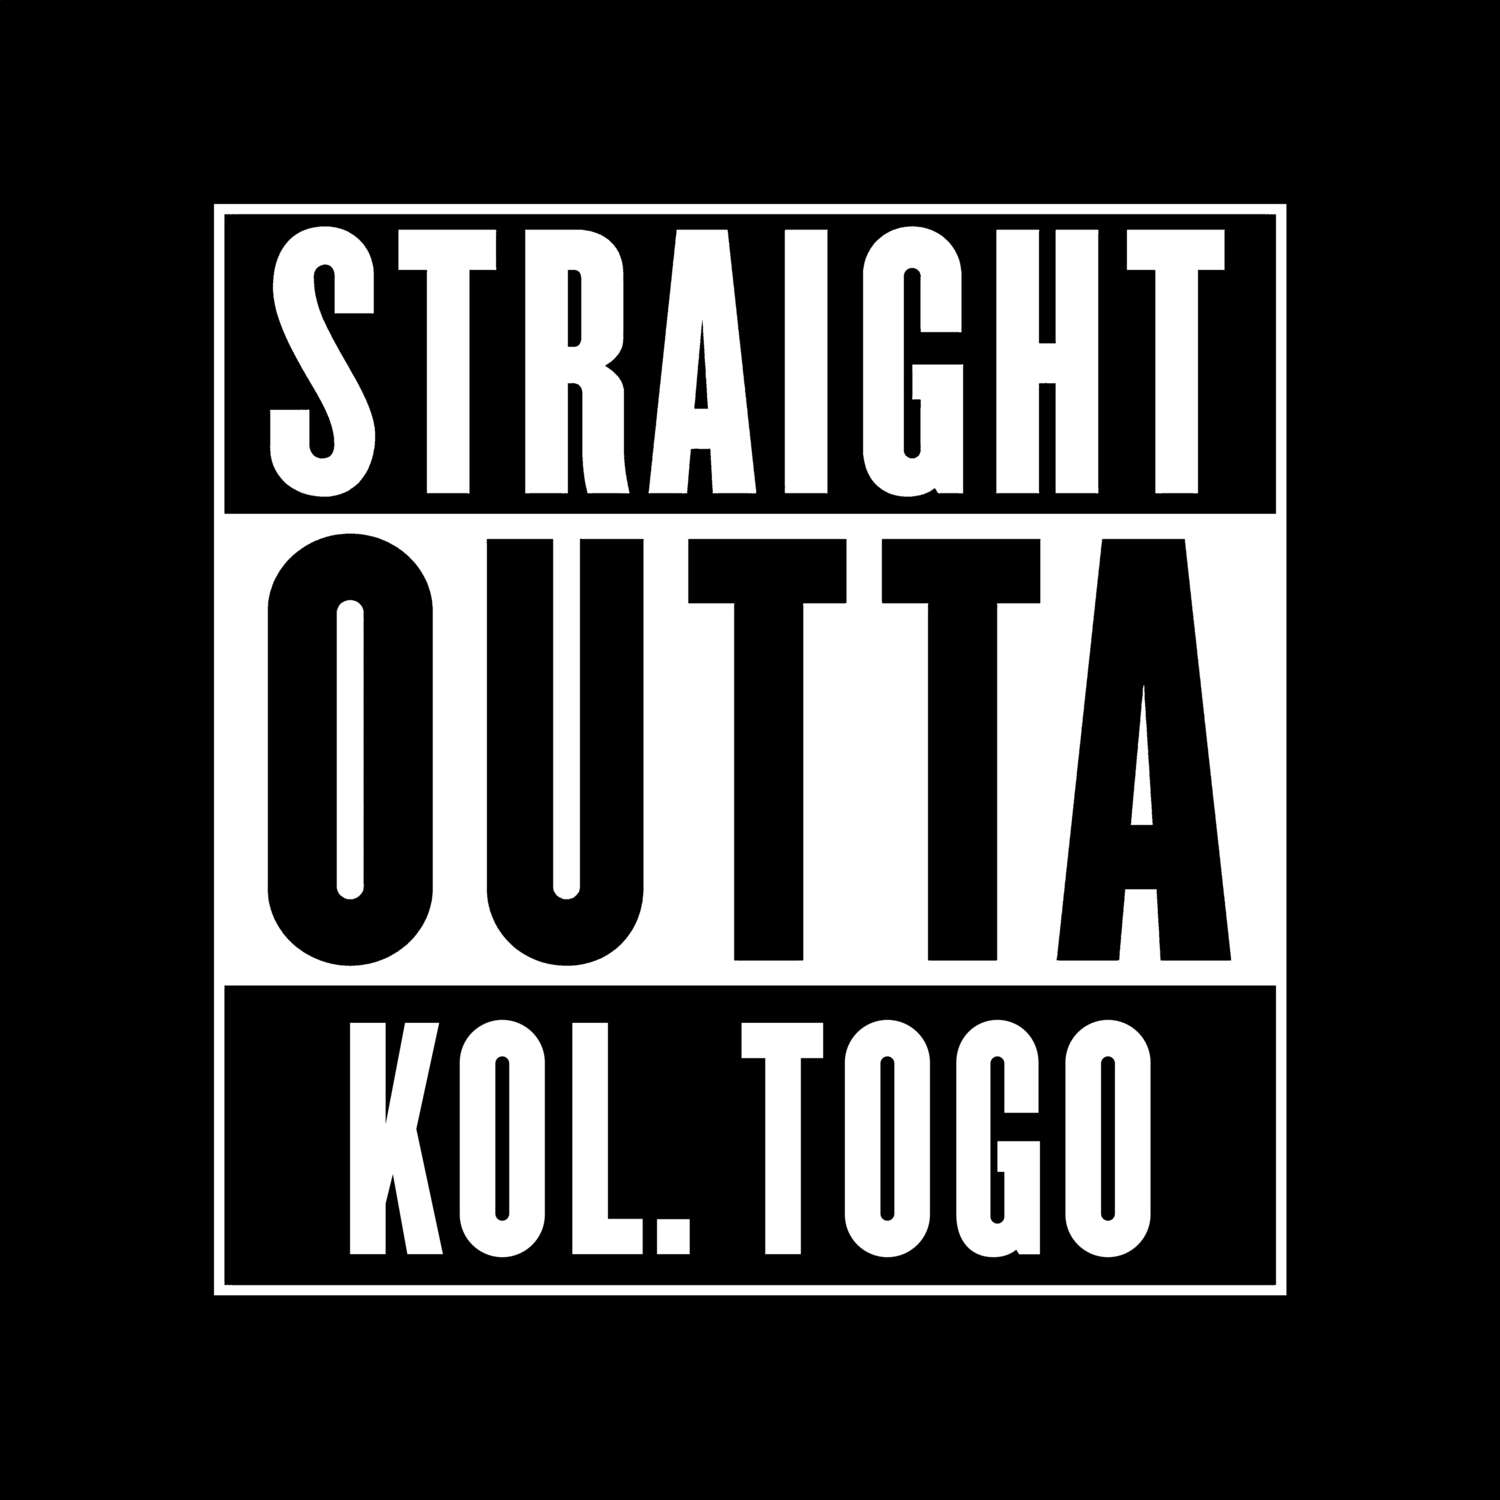 Kol. Togo T-Shirt »Straight Outta«